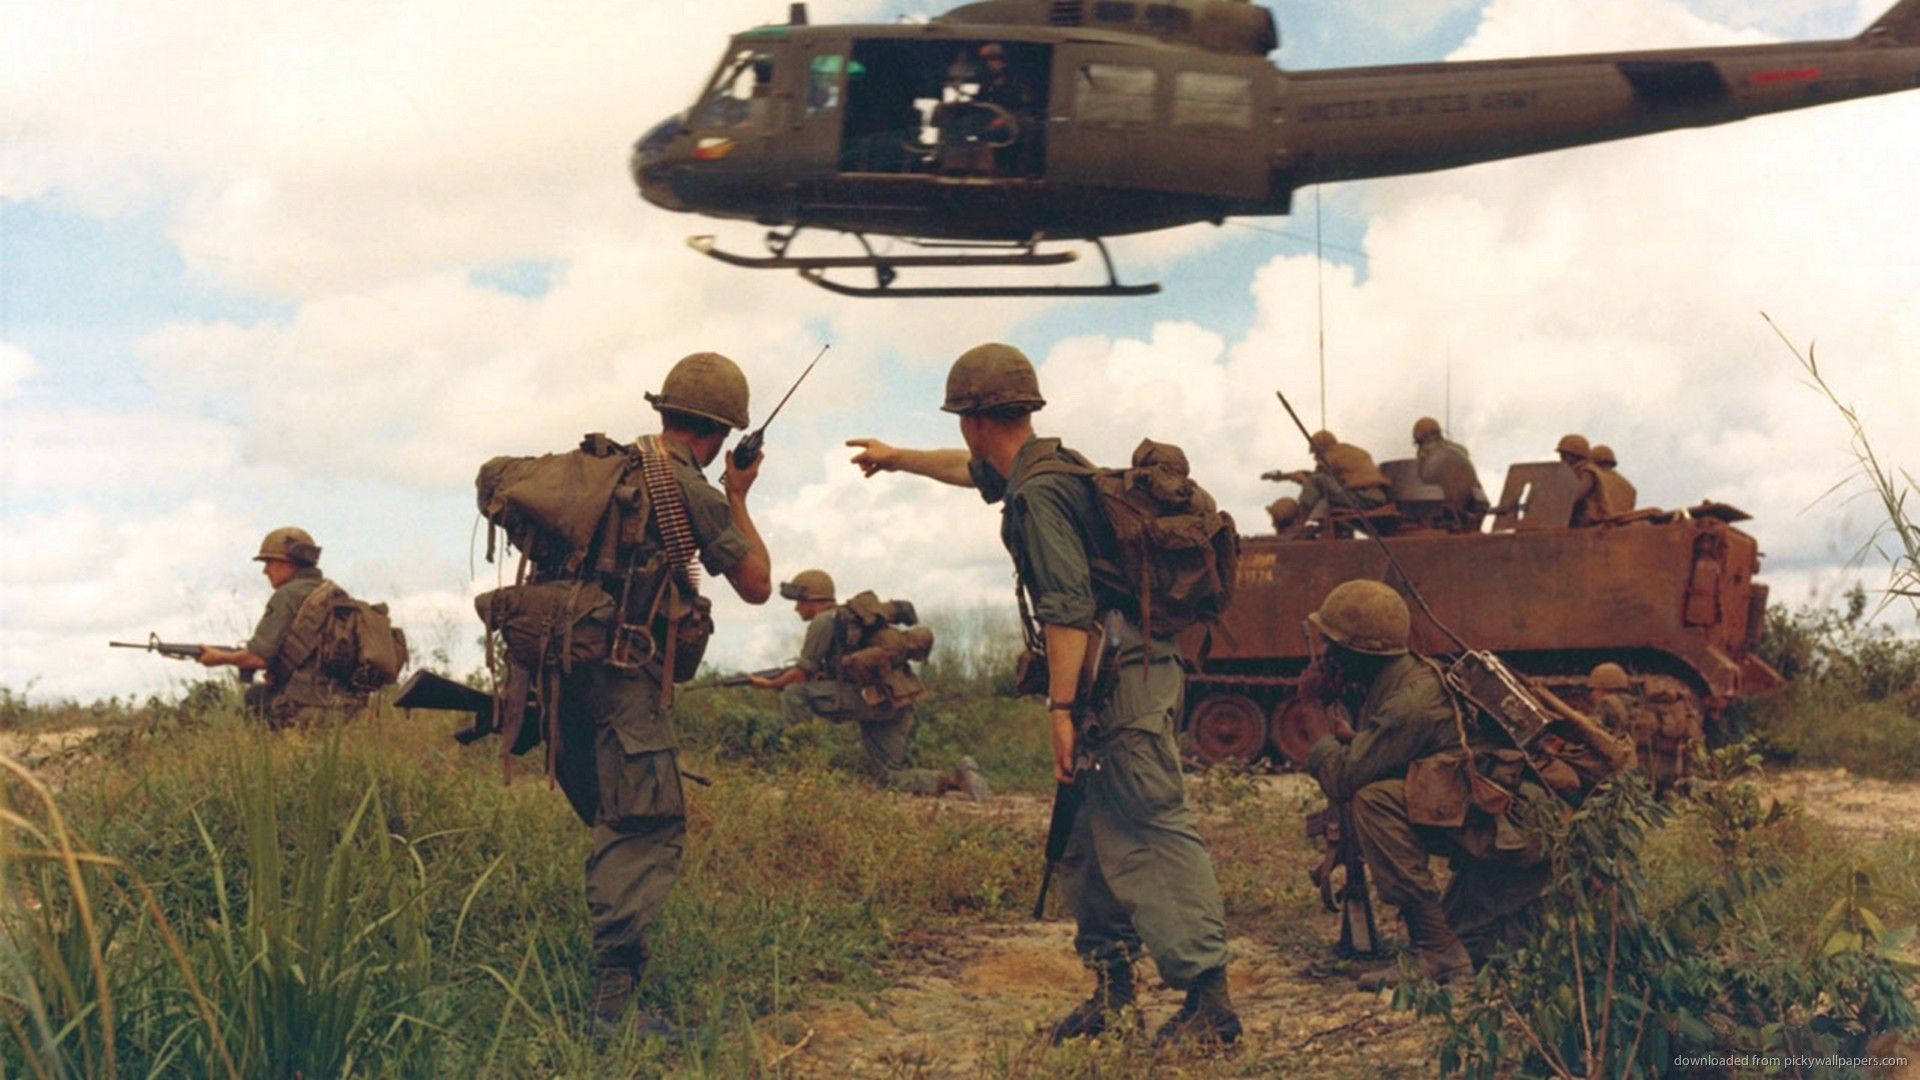 Vietnam War Wallpapers